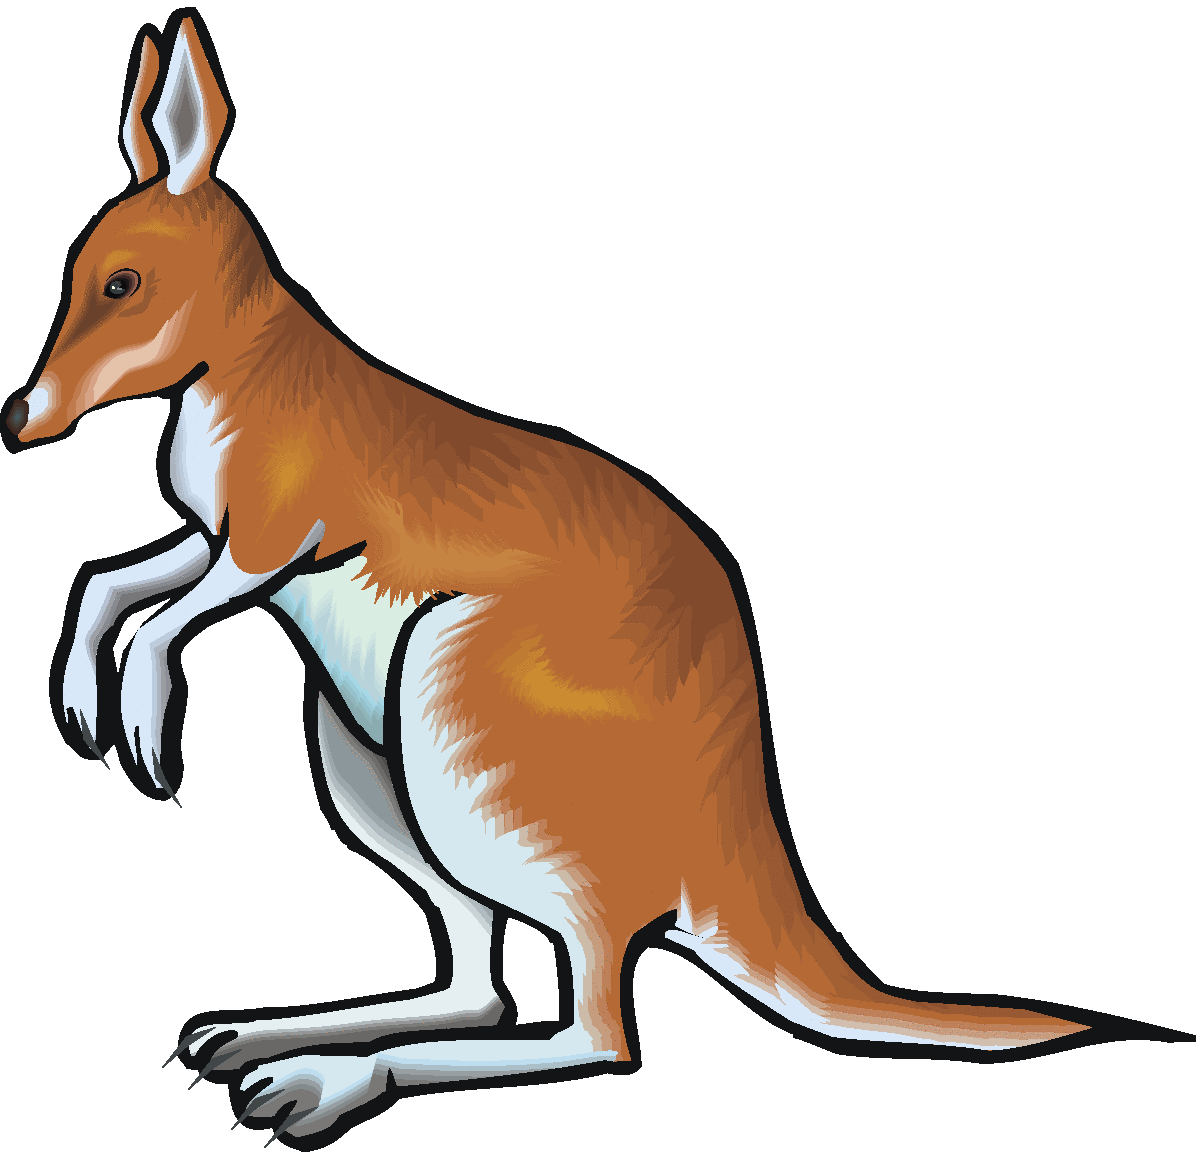 kangaroo jumping clipart - photo #8